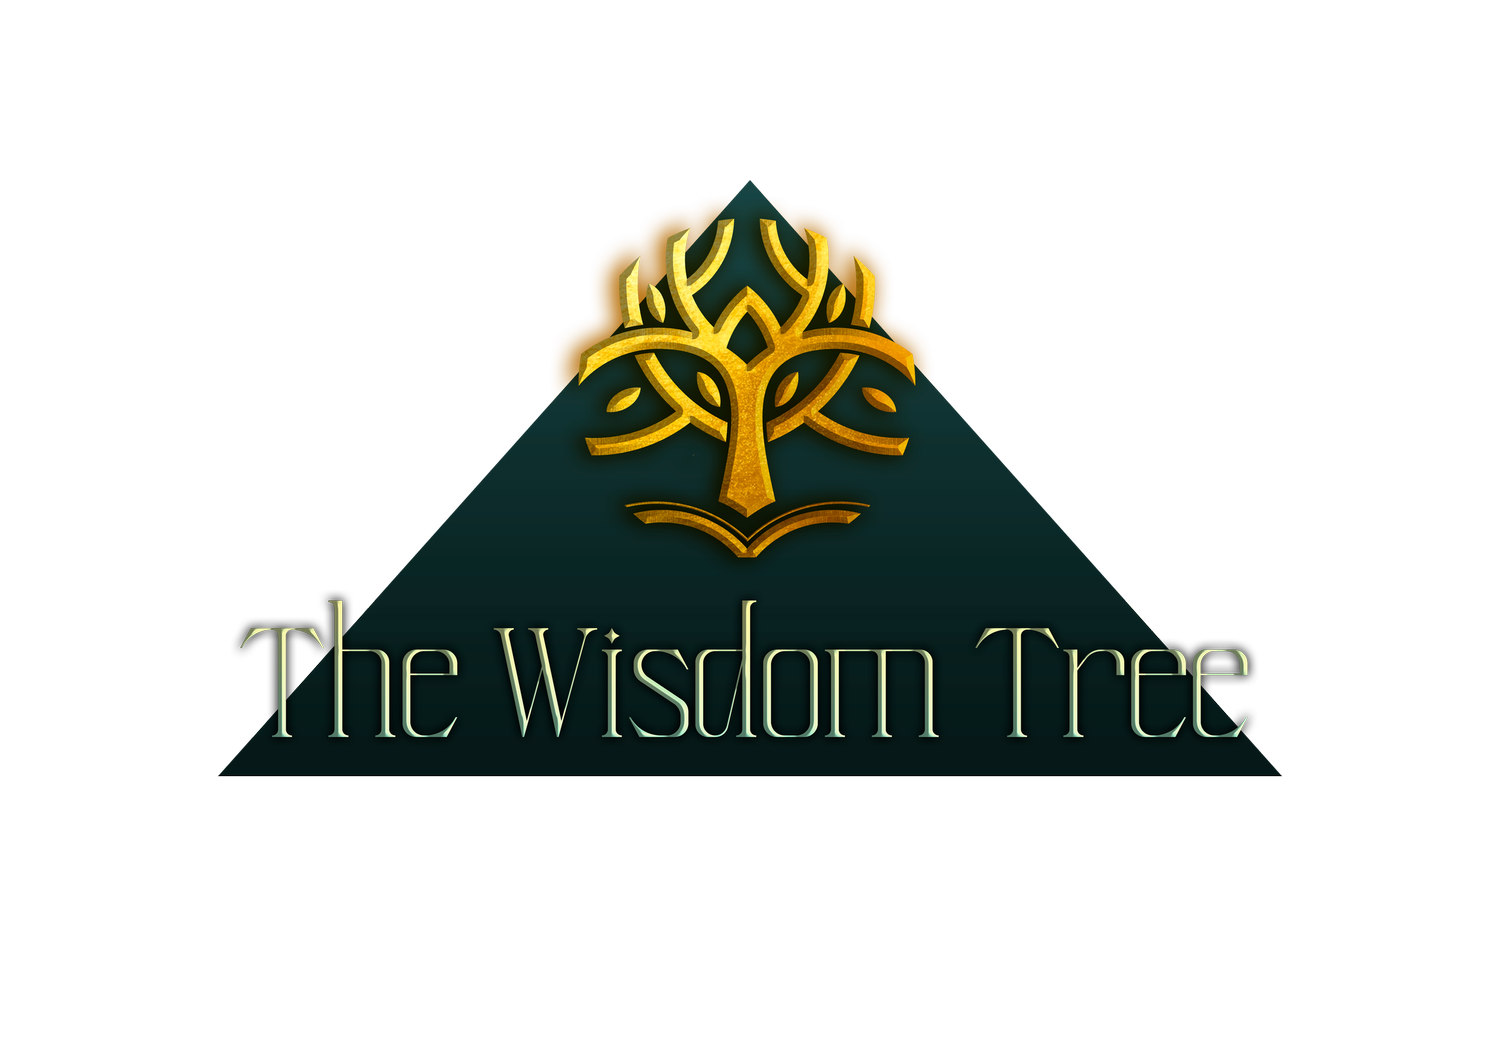 The Wisdom Tree band